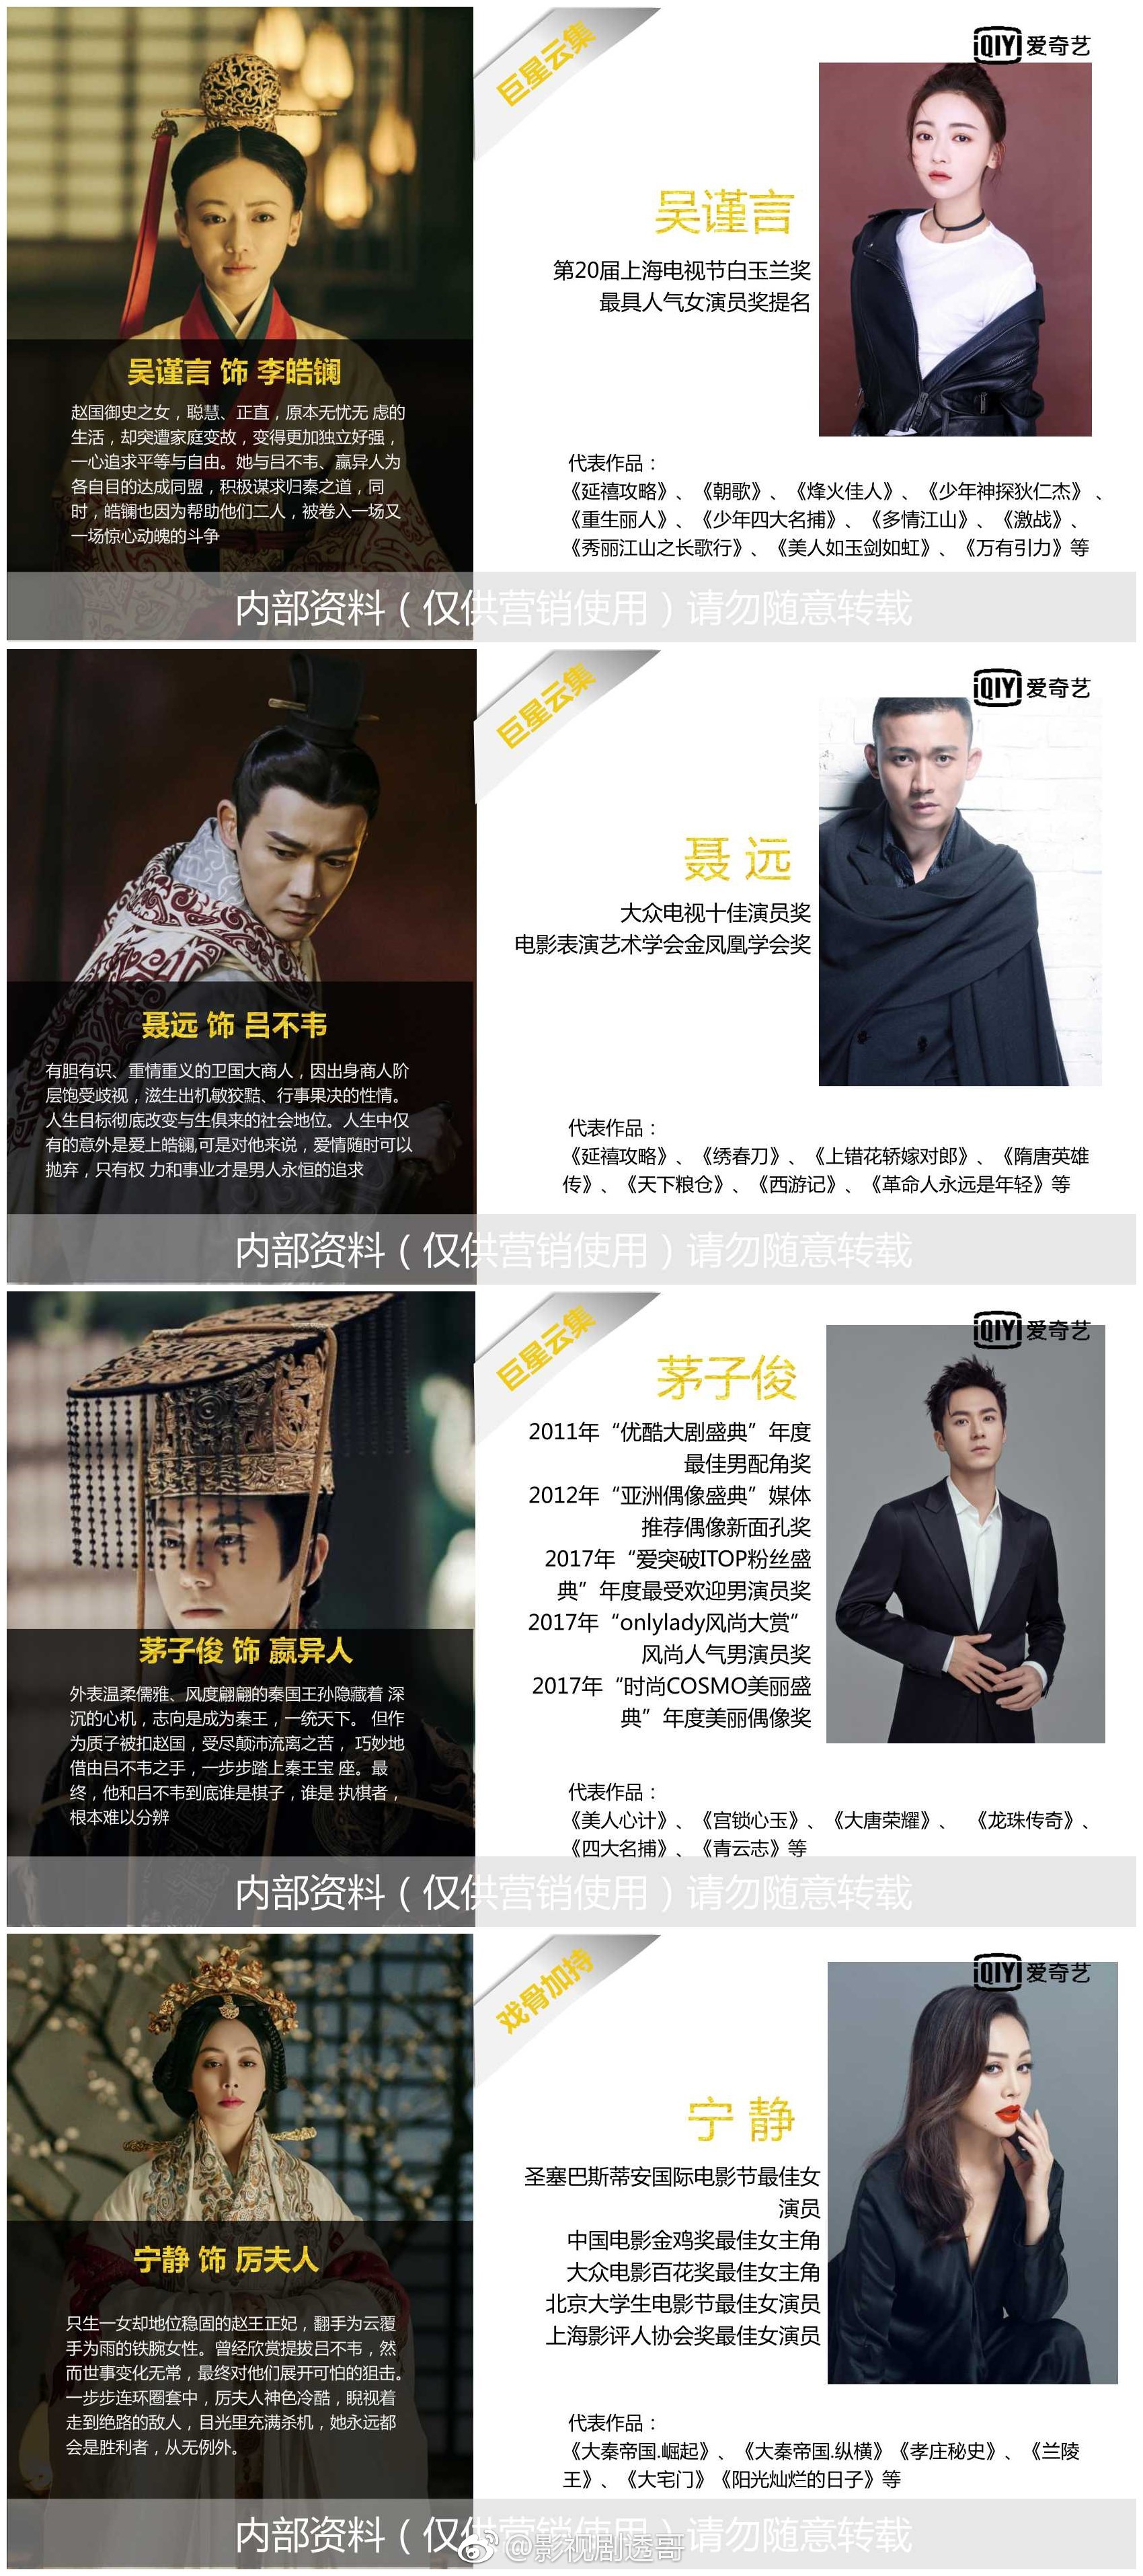 Current Mainland WebDrama 2019] The Legend of Hao Lan / Beauty Hao Lan 皓镧传  - Mainland China - Soompi Forums